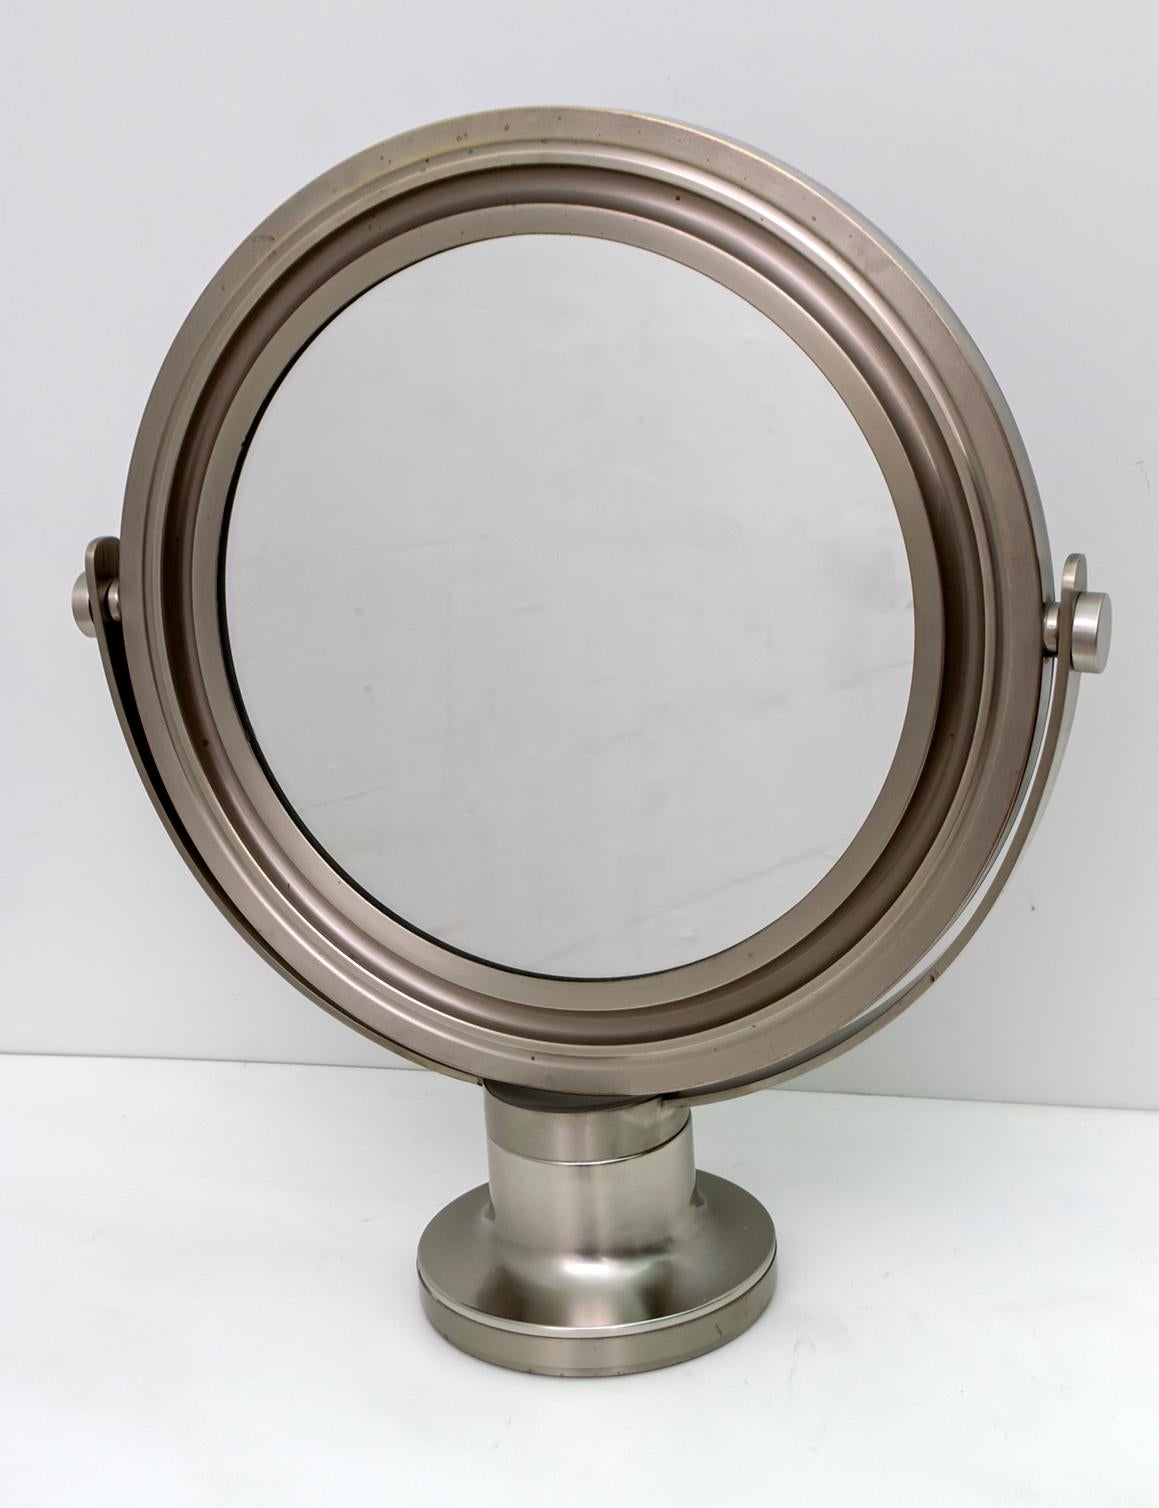 Sergio Mazza Mid-Century Modern Italian Metal Nickel Plated Table Mirror, 1970s For Sale 2